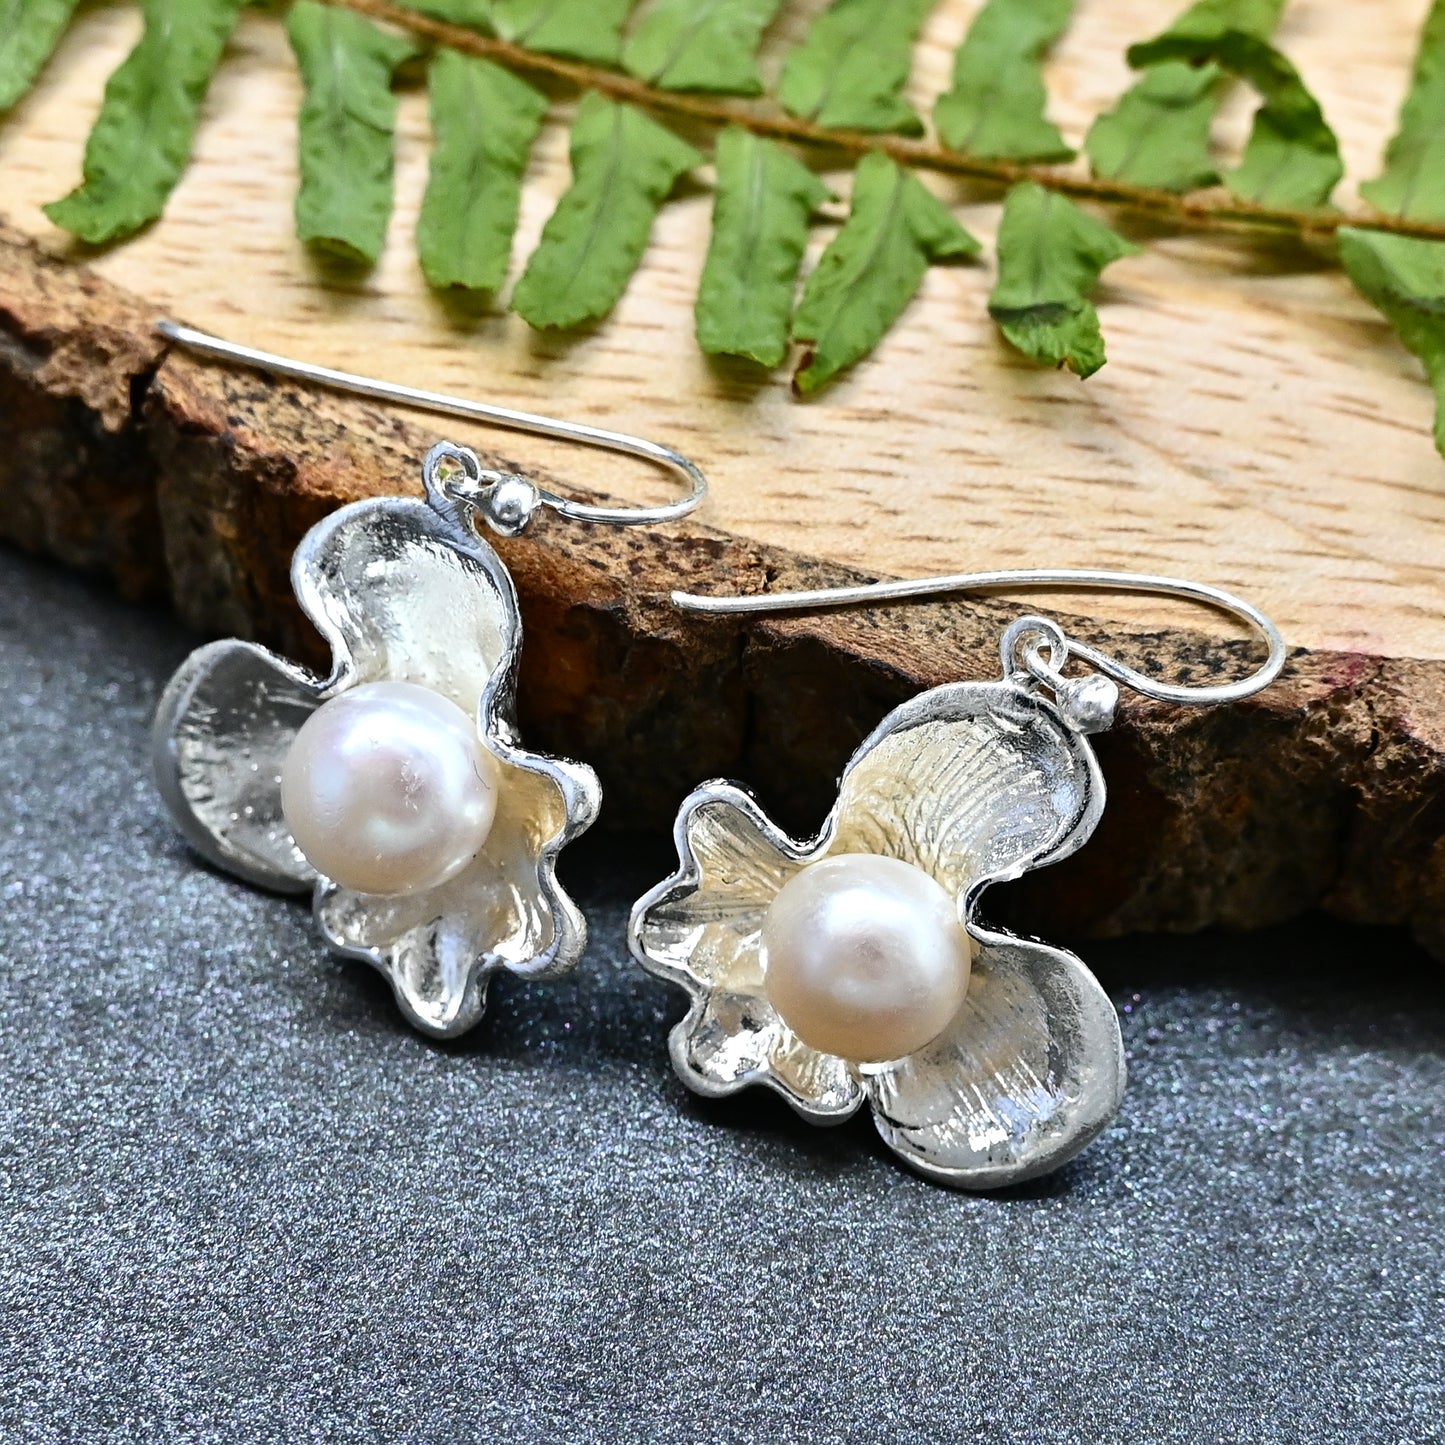 Flower with Pearl Earrings! 🌸✨